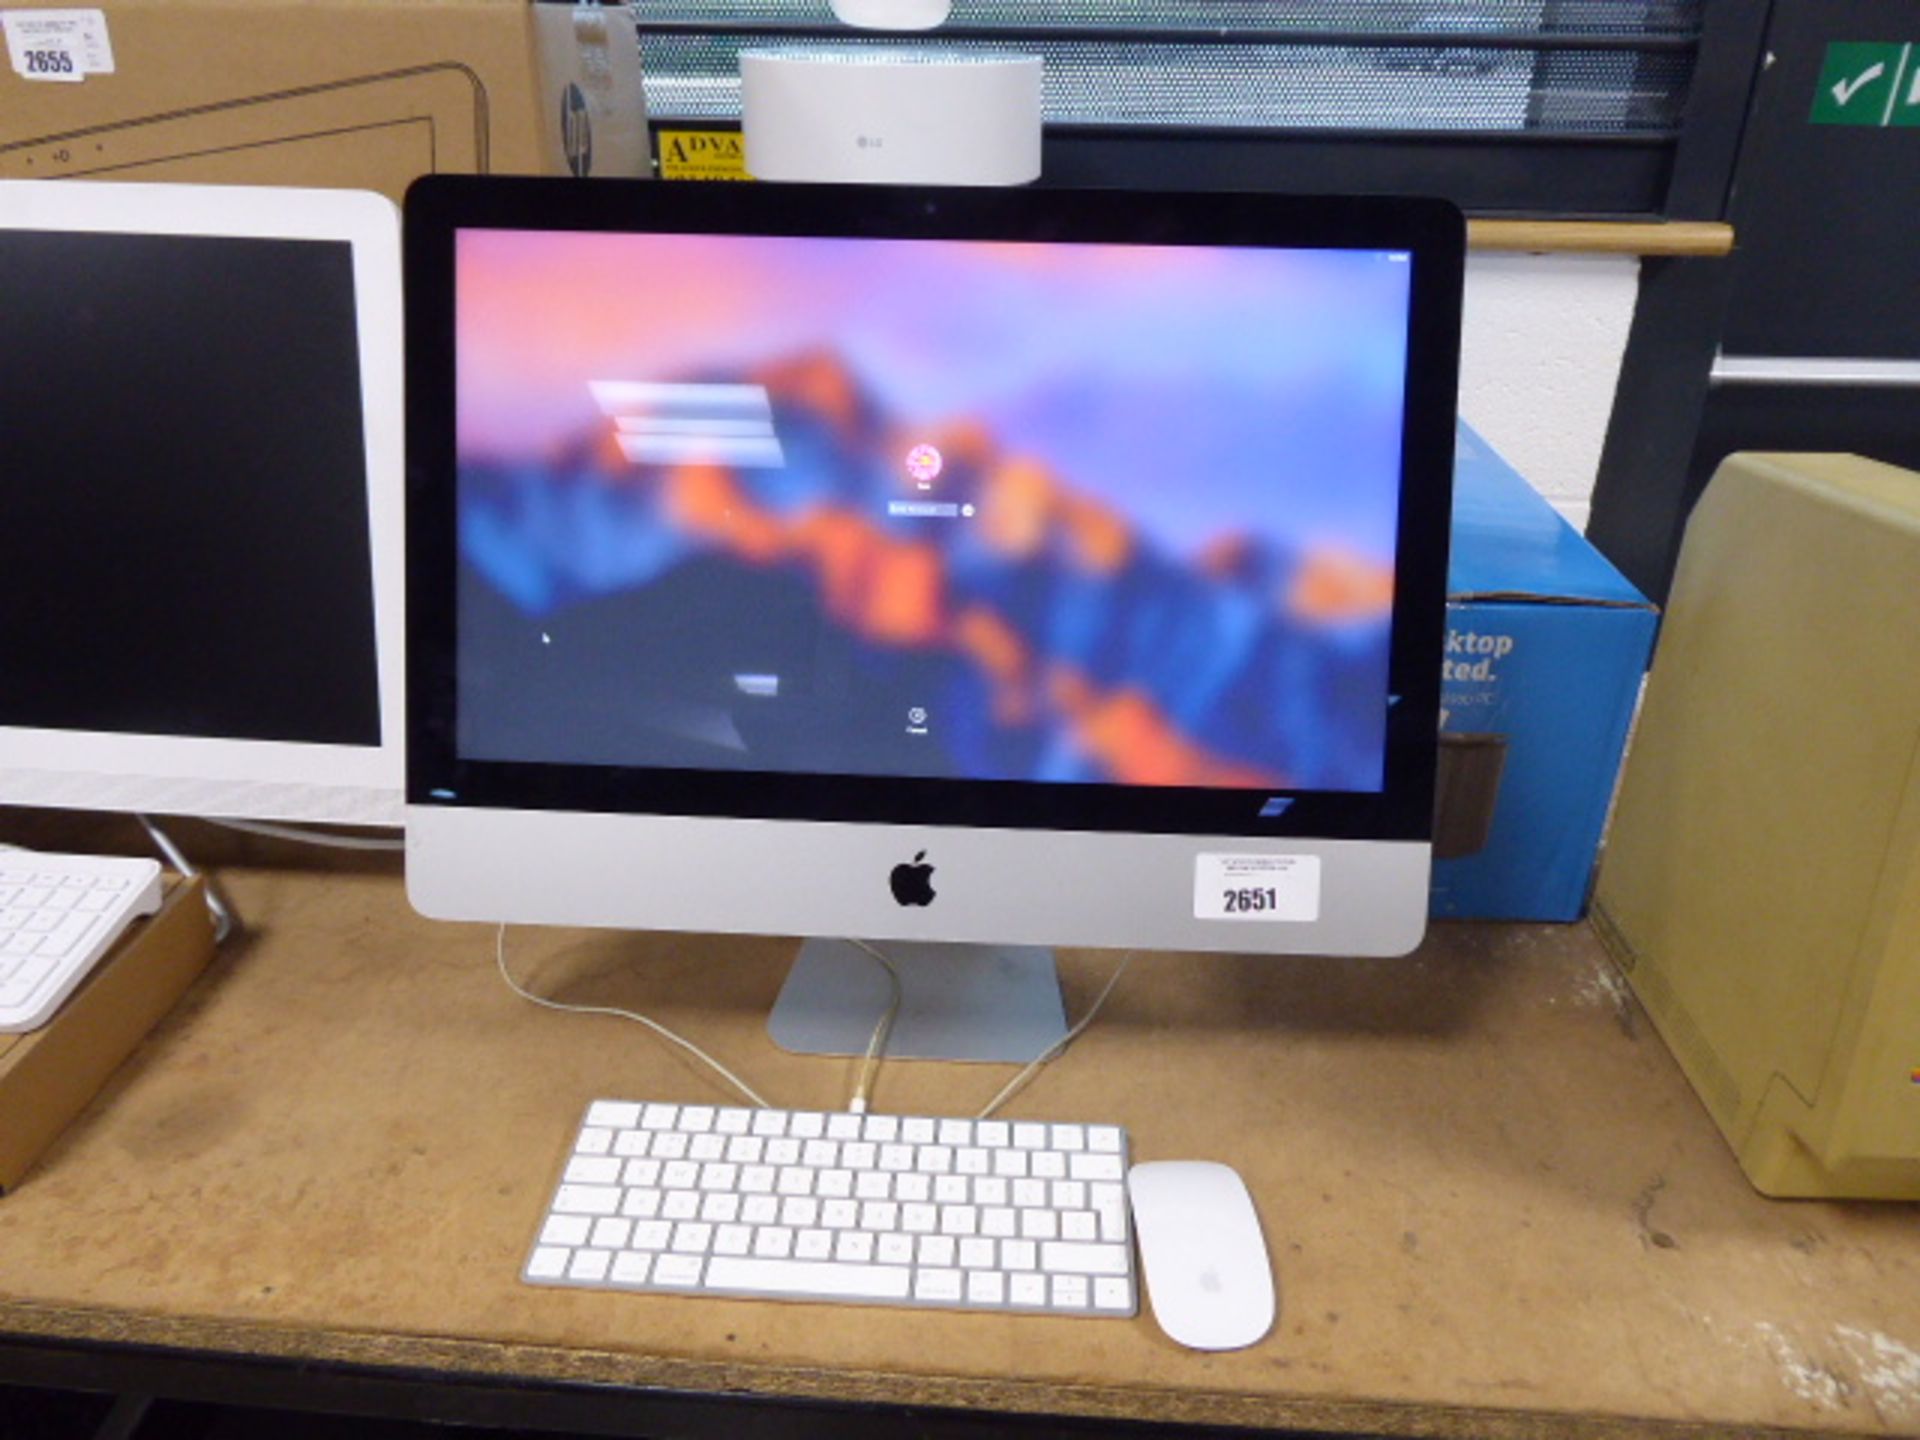 Apple iMac PC intel i5 processor, 8GB RAM, 1TB disk drive, wireless keyboard and mouse